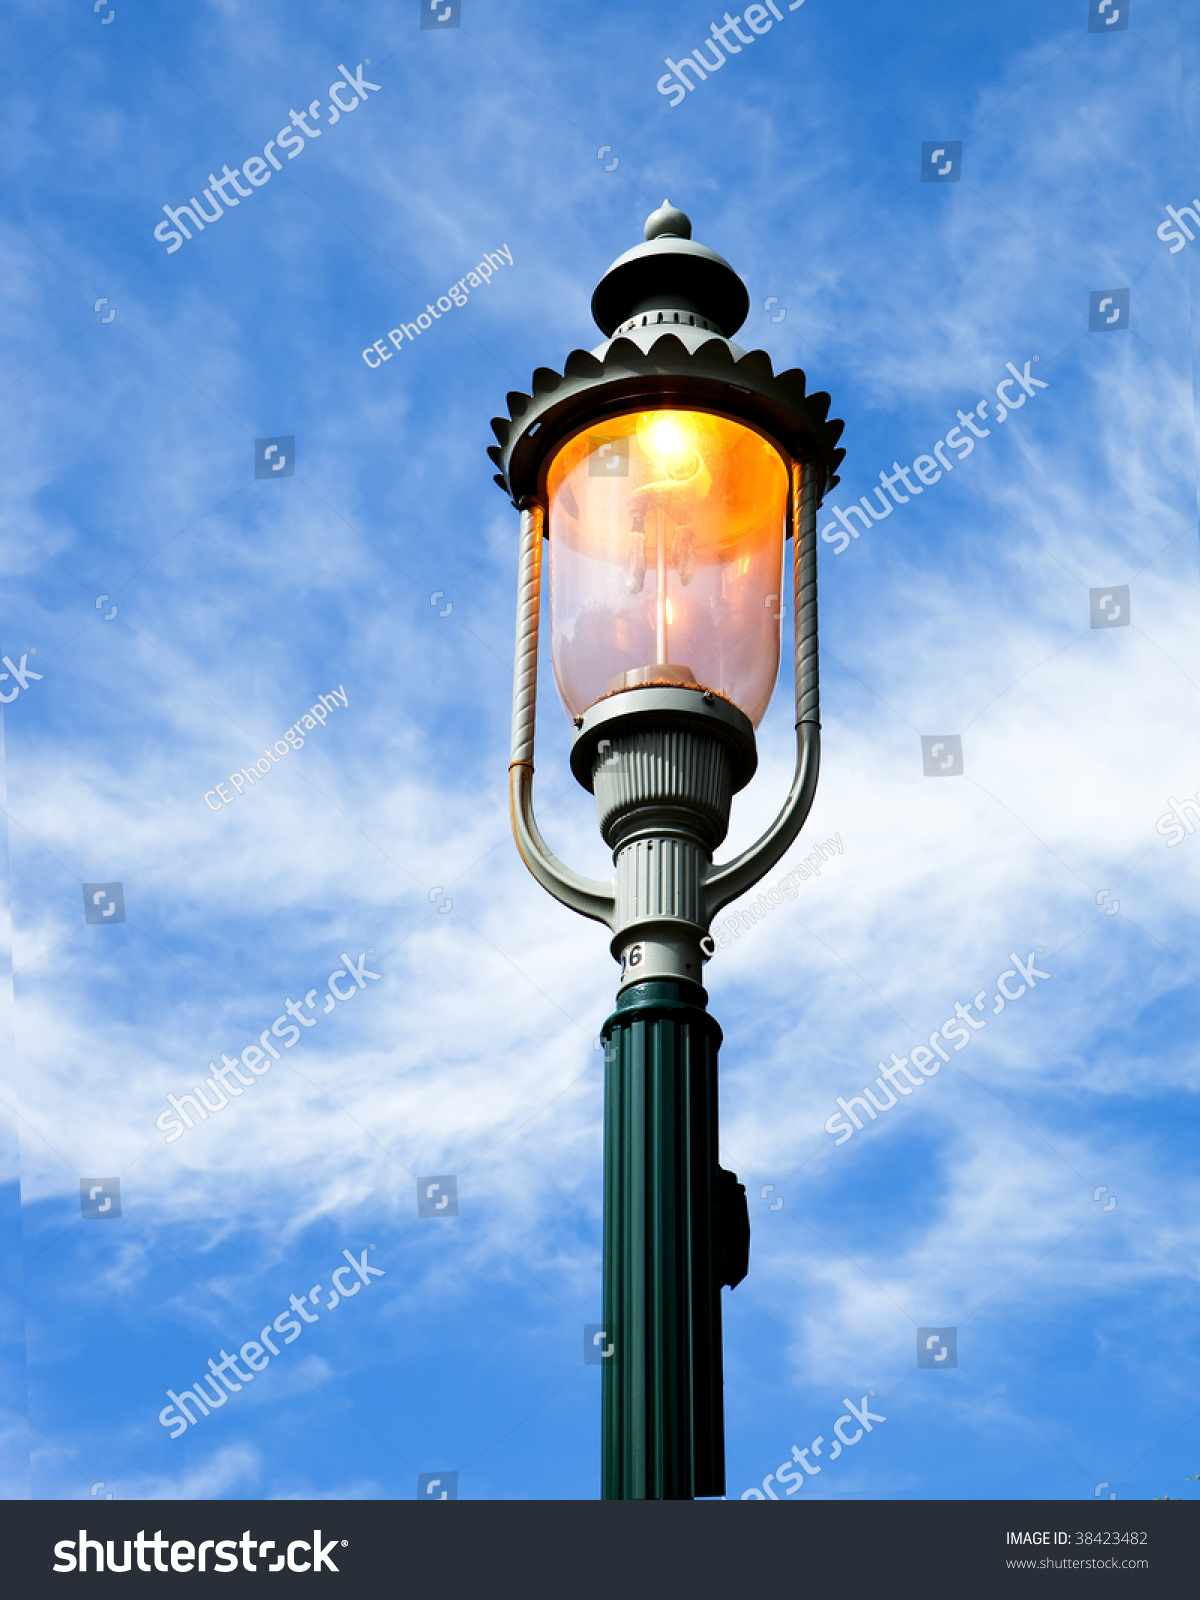 Gas Light Stock Photo 38423482 - Shutterstock